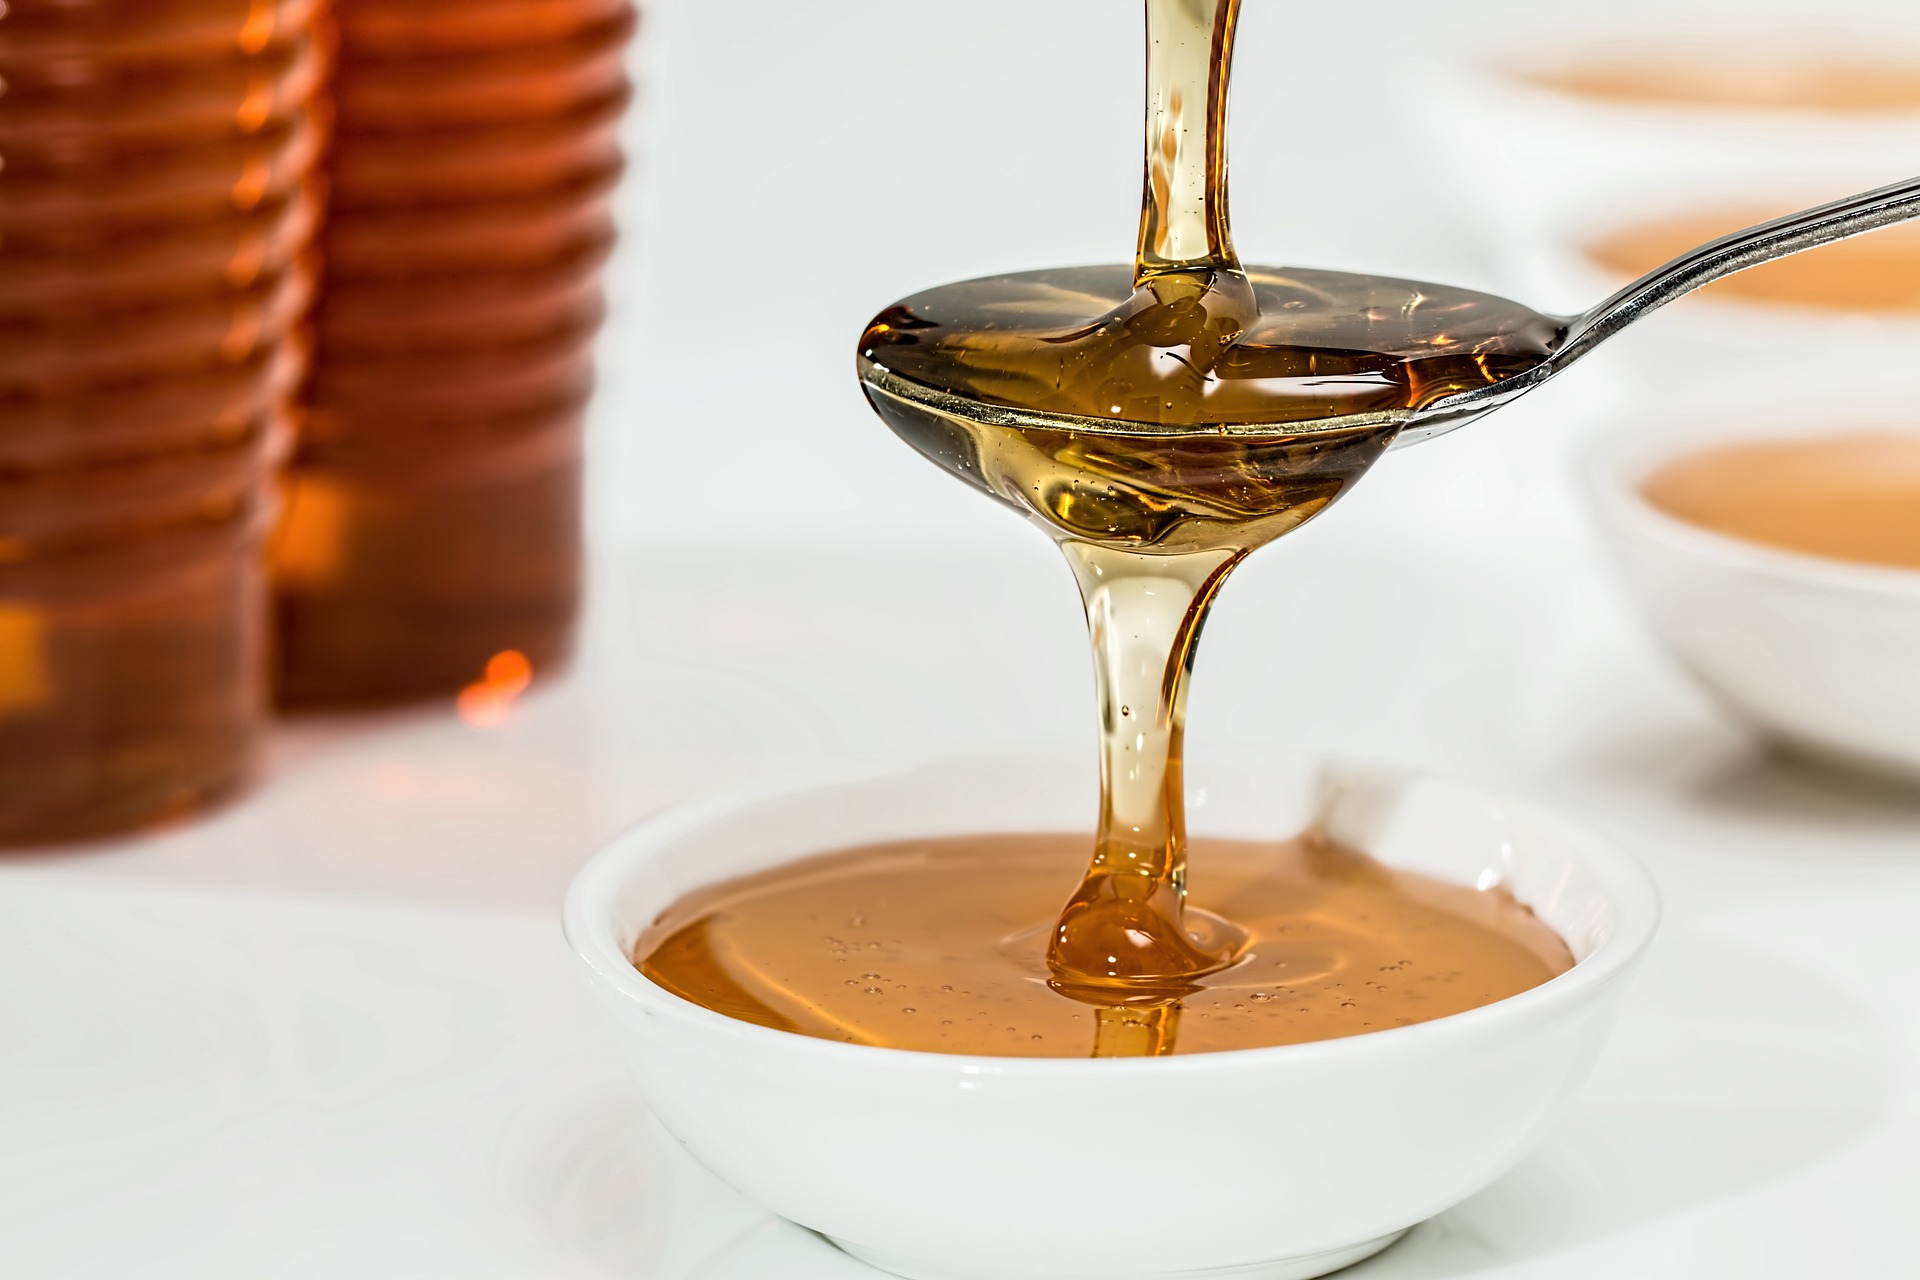 Honey helps eczema